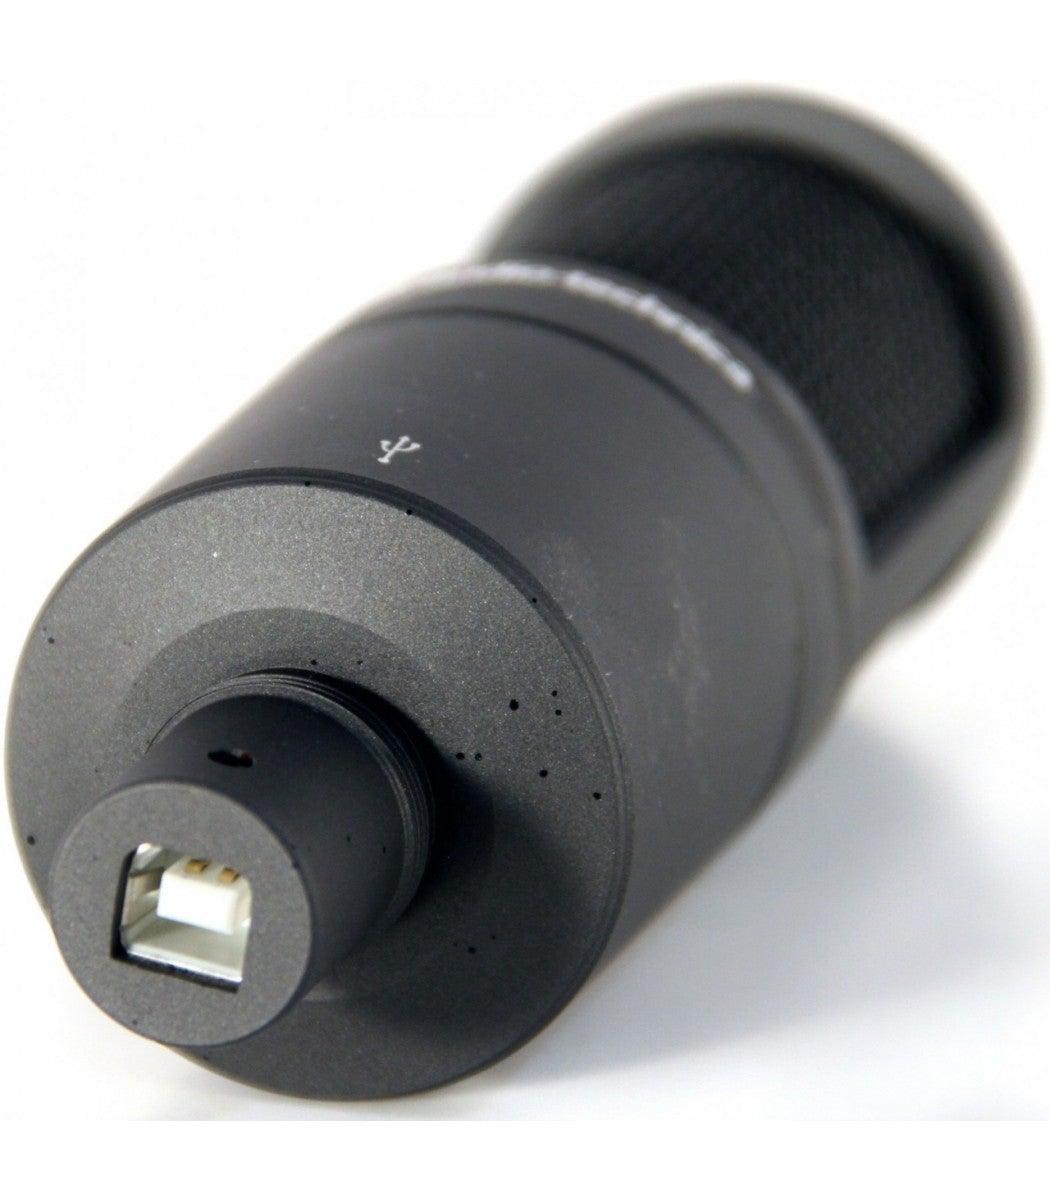 AUDIO TECHNICA AT2020 USB+ USB CARDIOID CONDENSER MICROPHONE | AUDIO TECHNICA , Zoso Music